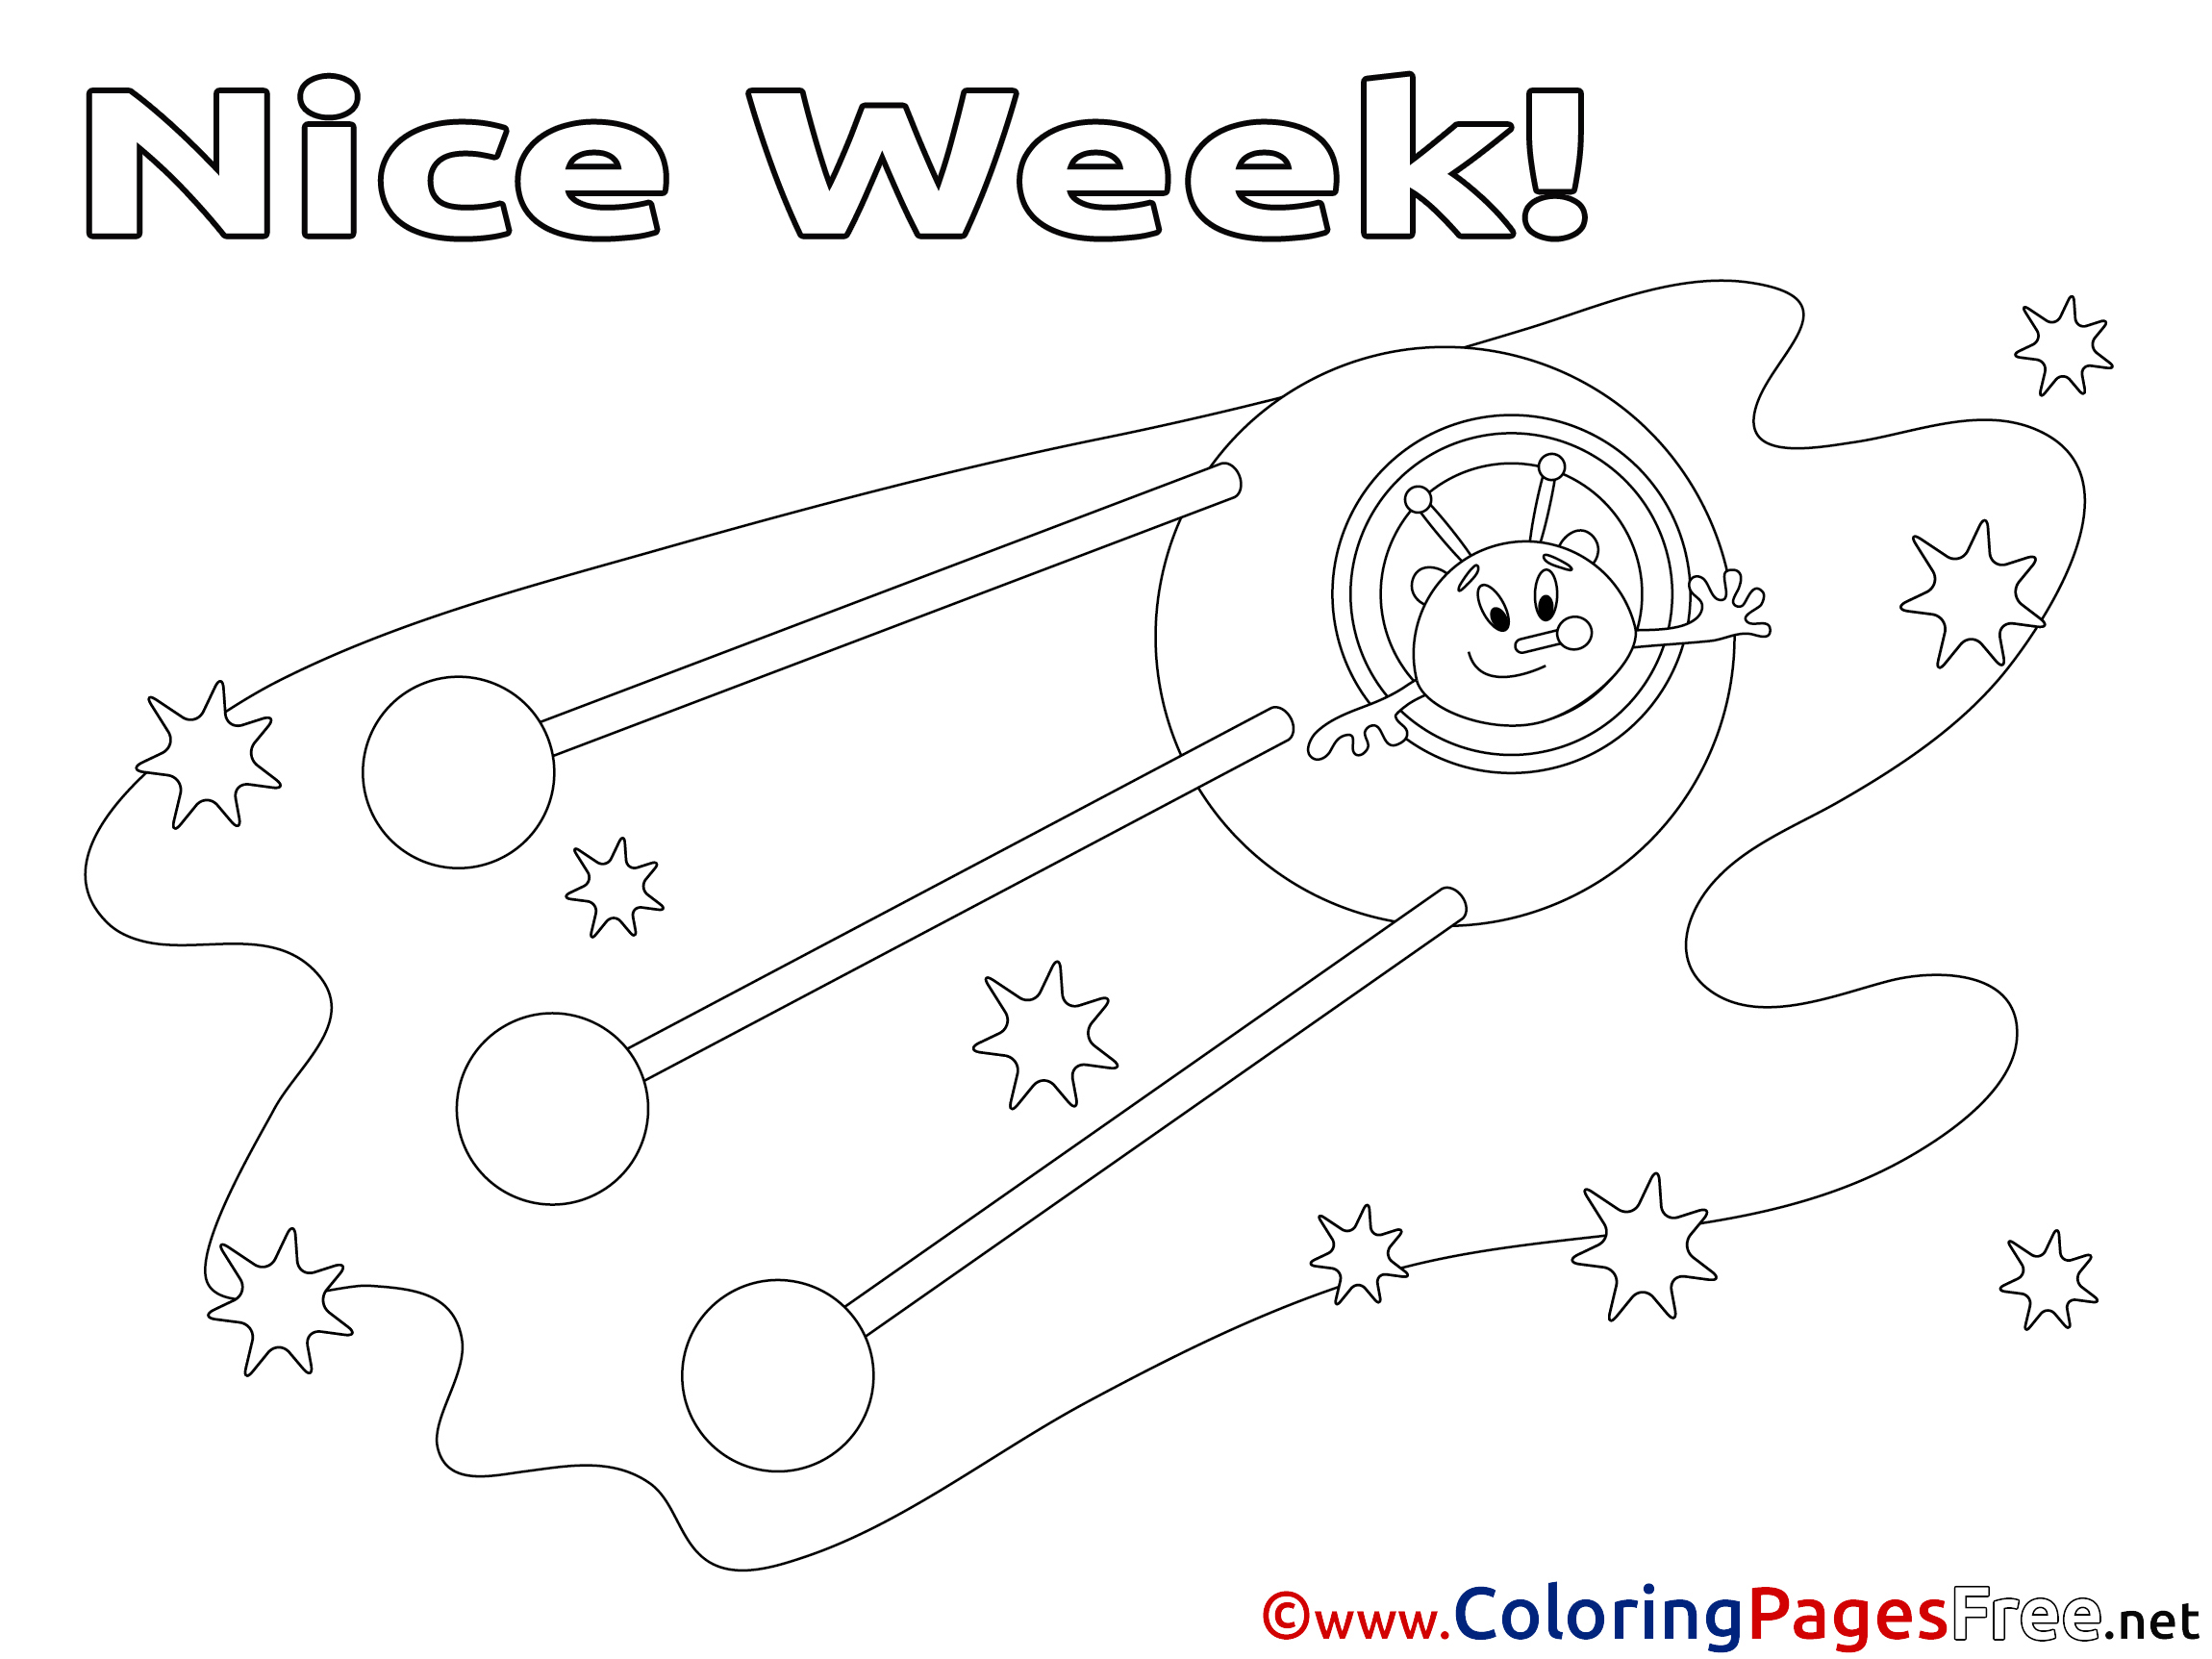 Space Coloring Sheets Nice Week free